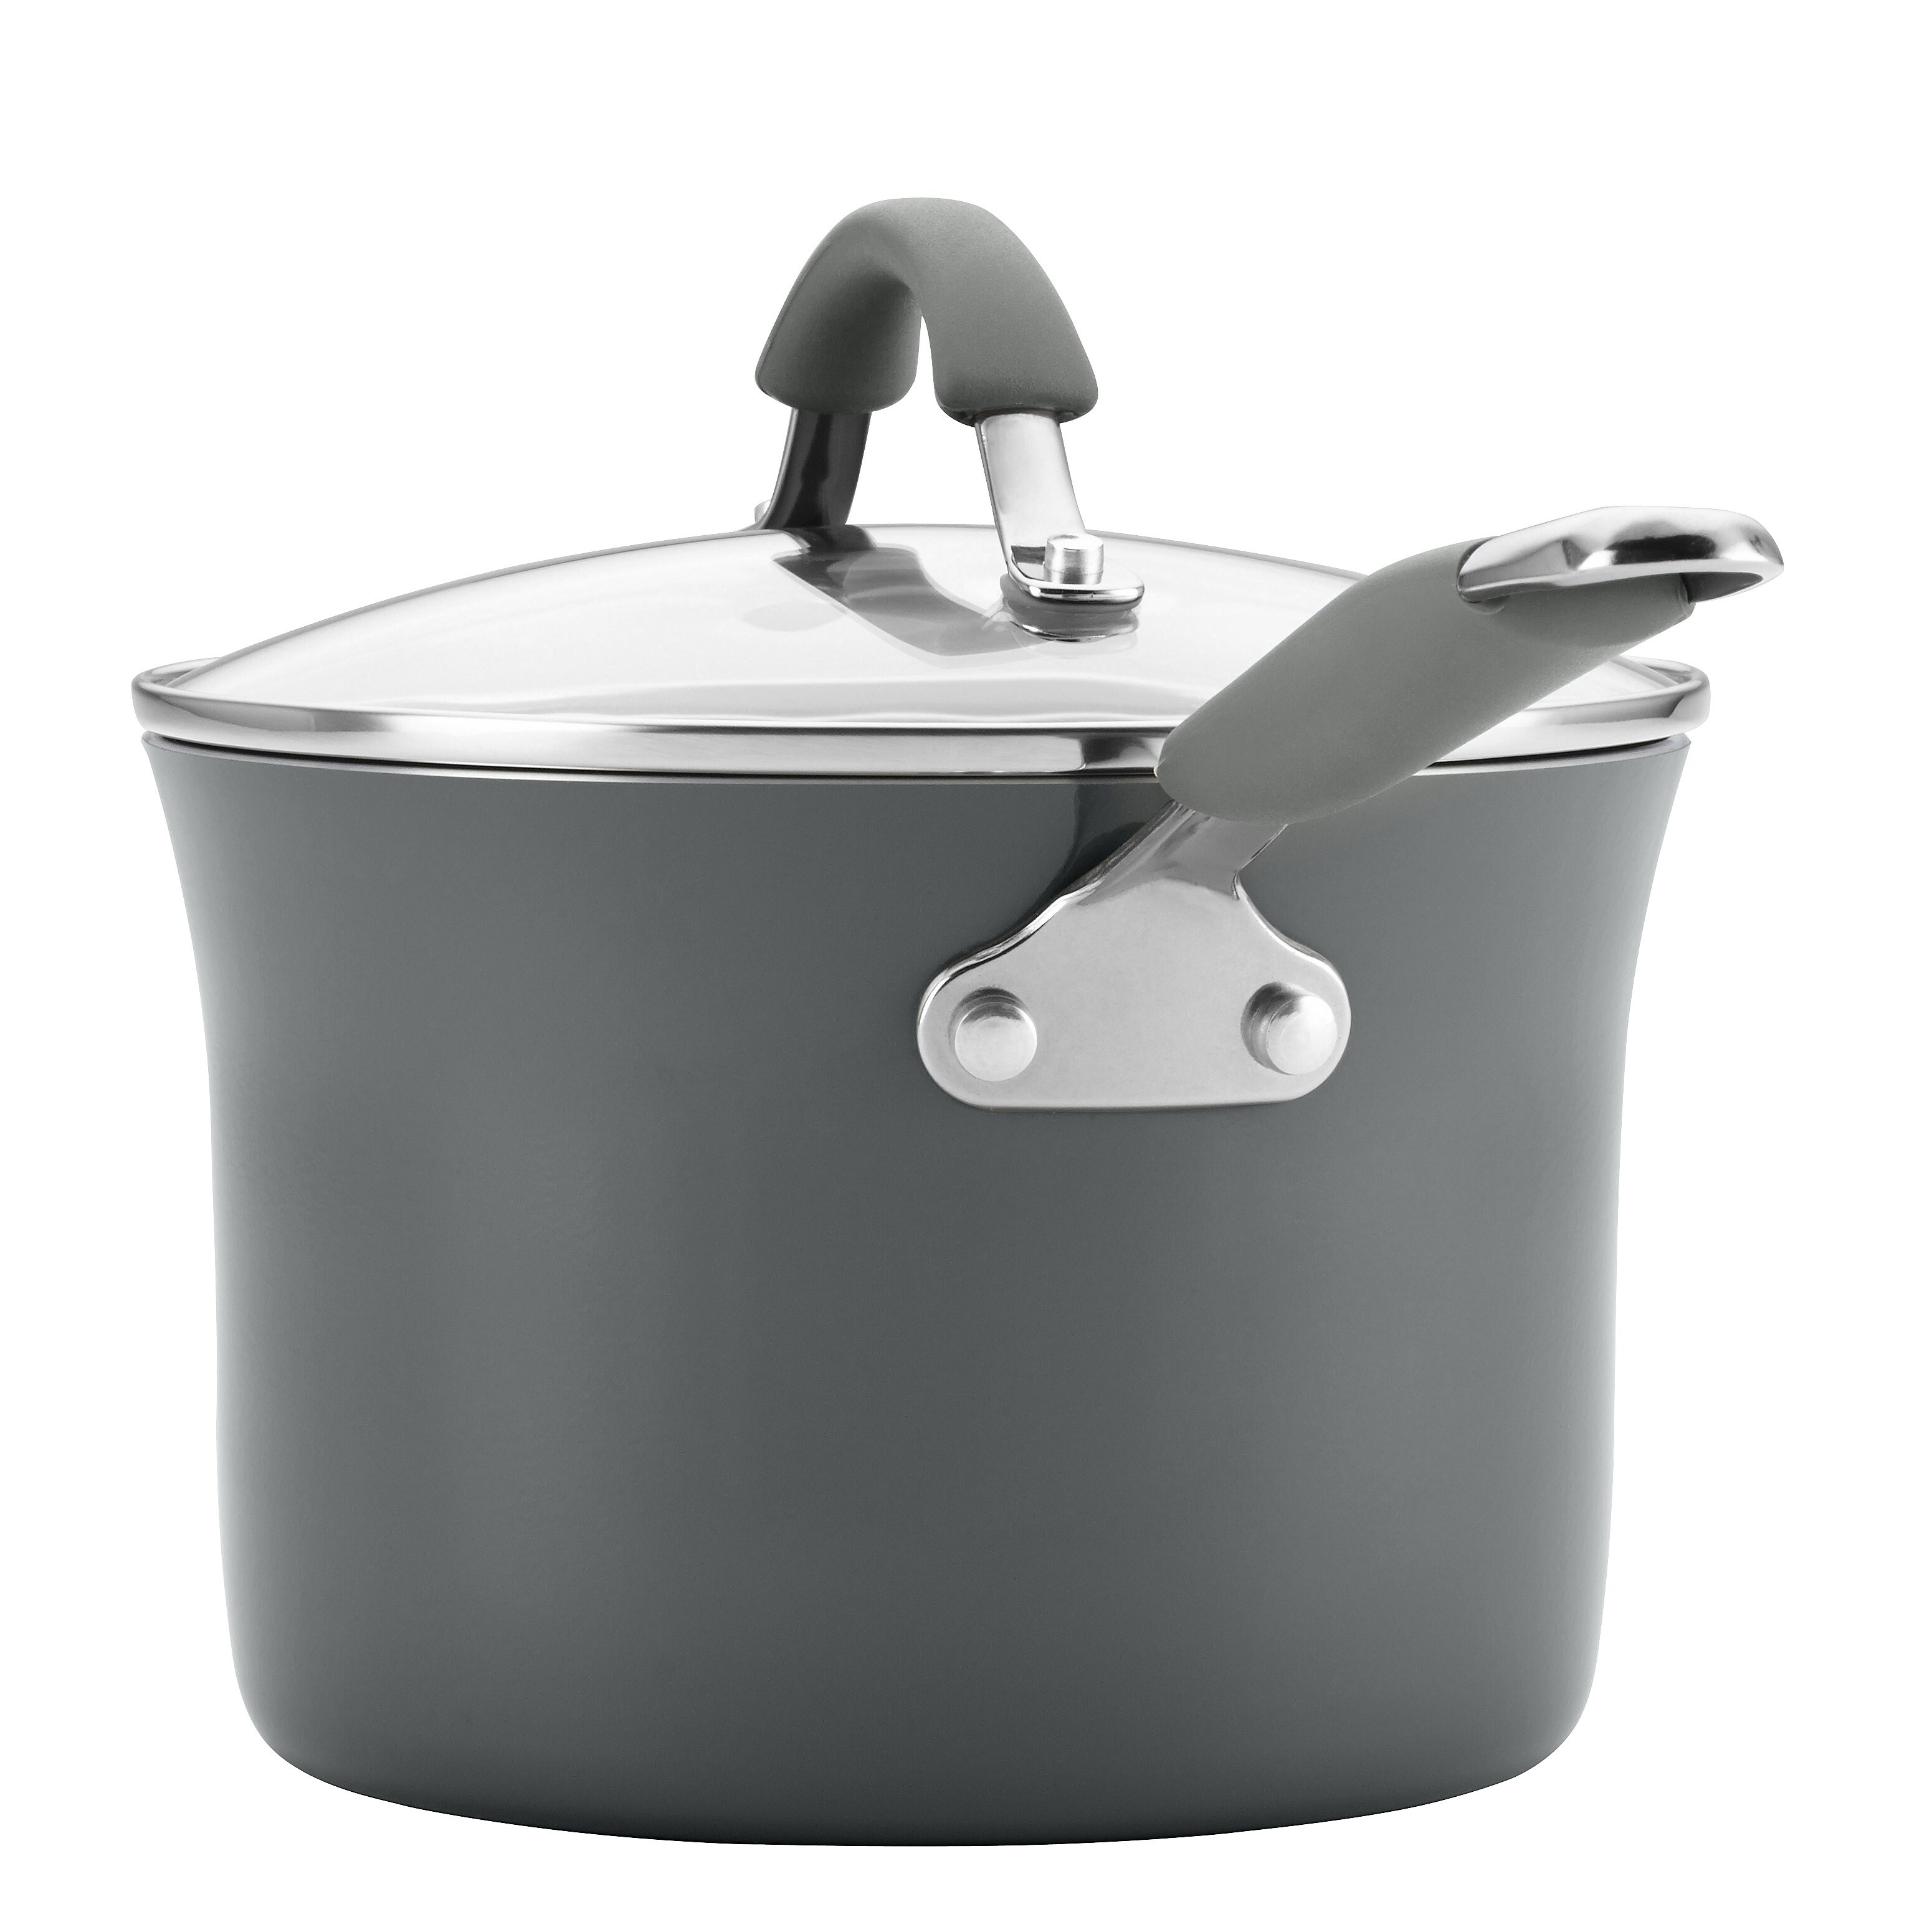  Rachael Ray Brights Nonstick Stock Pot/Stockpot with Lid - 6  Quart, Gray, Sea Salt Gray: Home & Kitchen